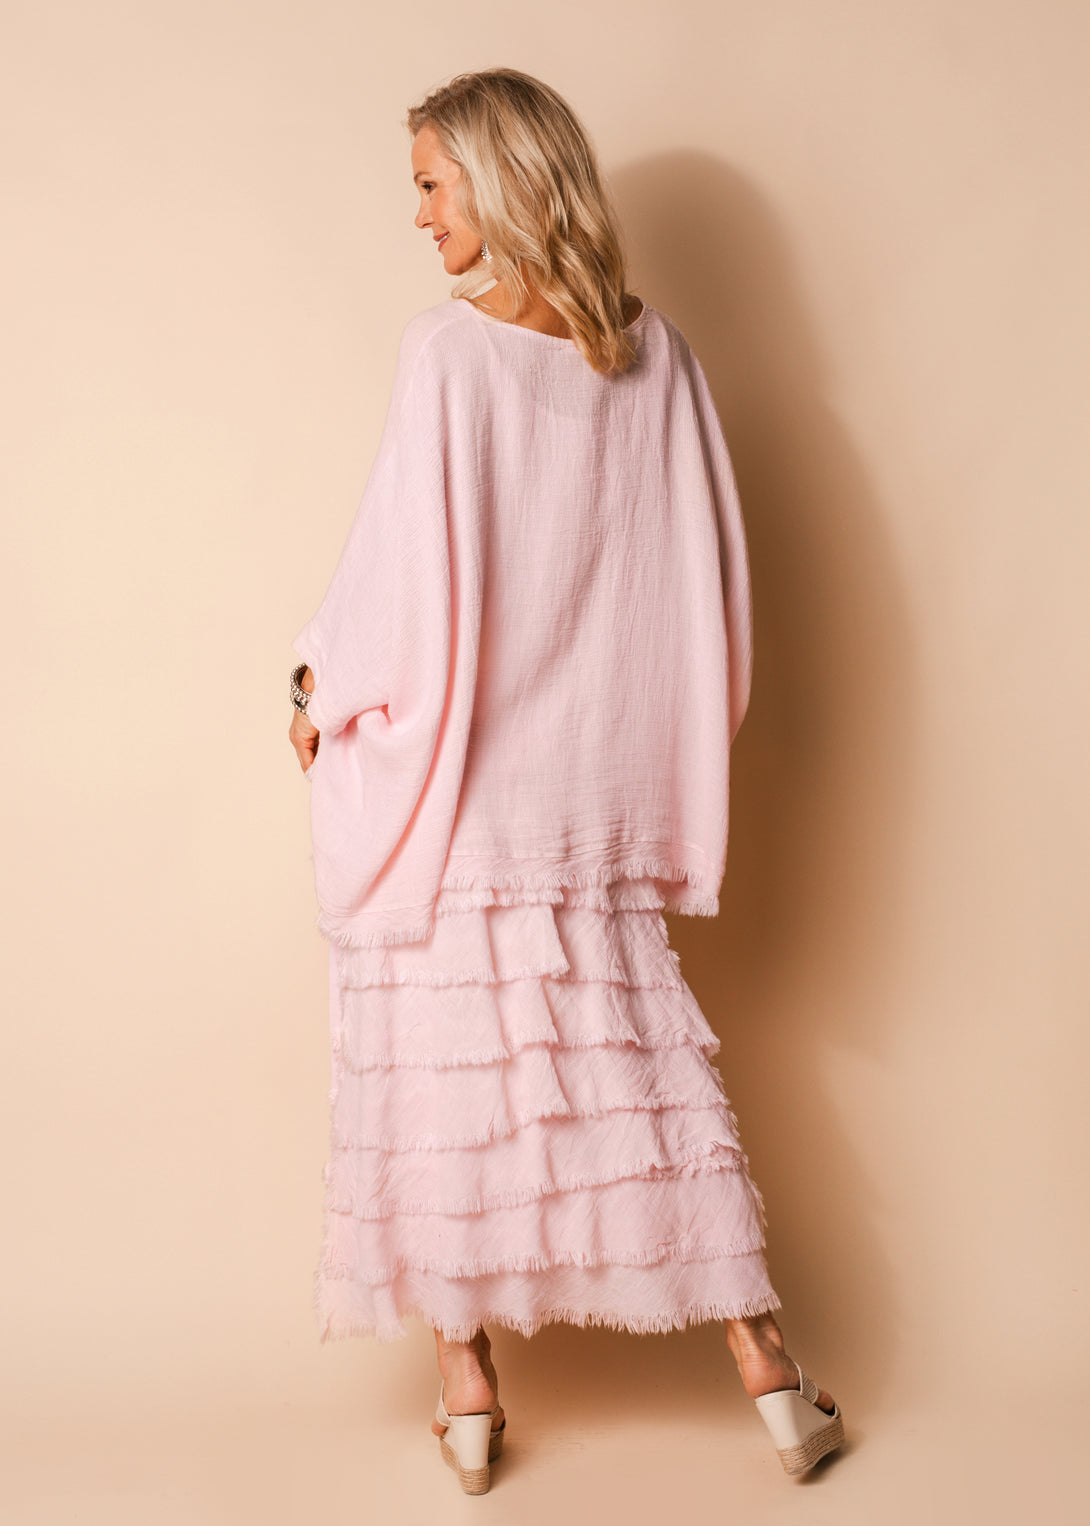 Julie Linen Skirt in Blush - Imagine Fashion